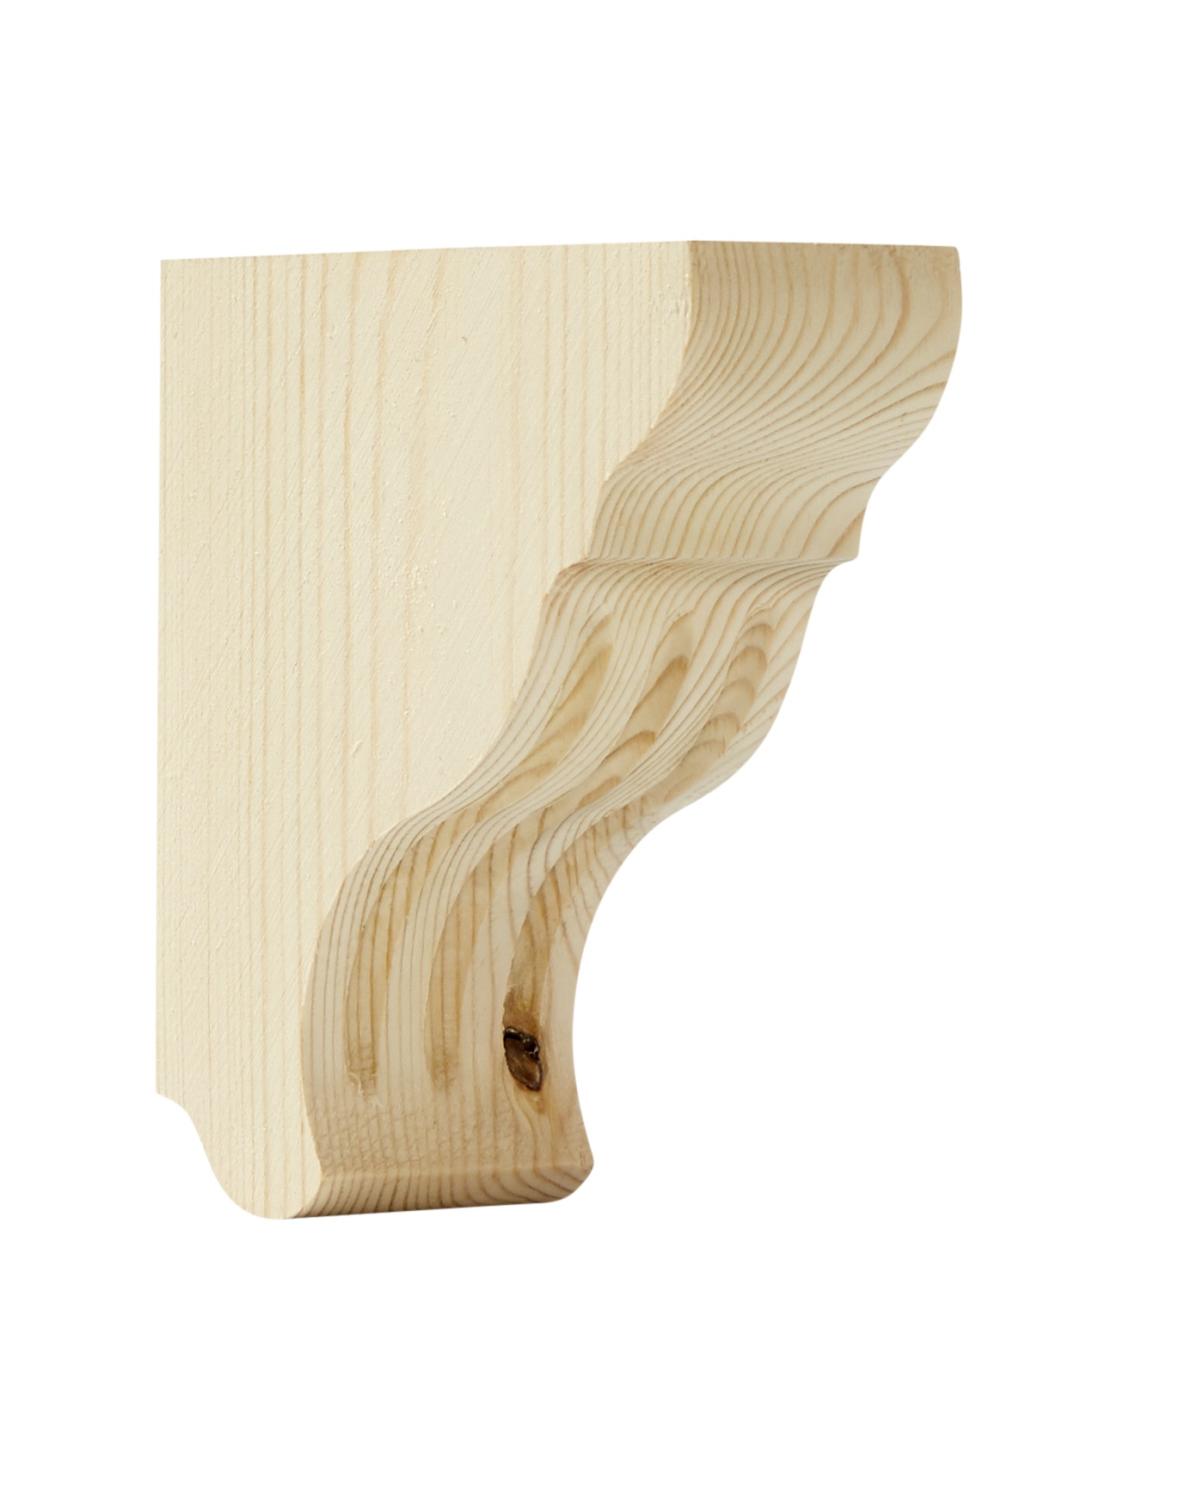 Old-fashioned wooden shelf bracket in pine - Model 300 - Wooden bracket in vintage style for shelving - old style